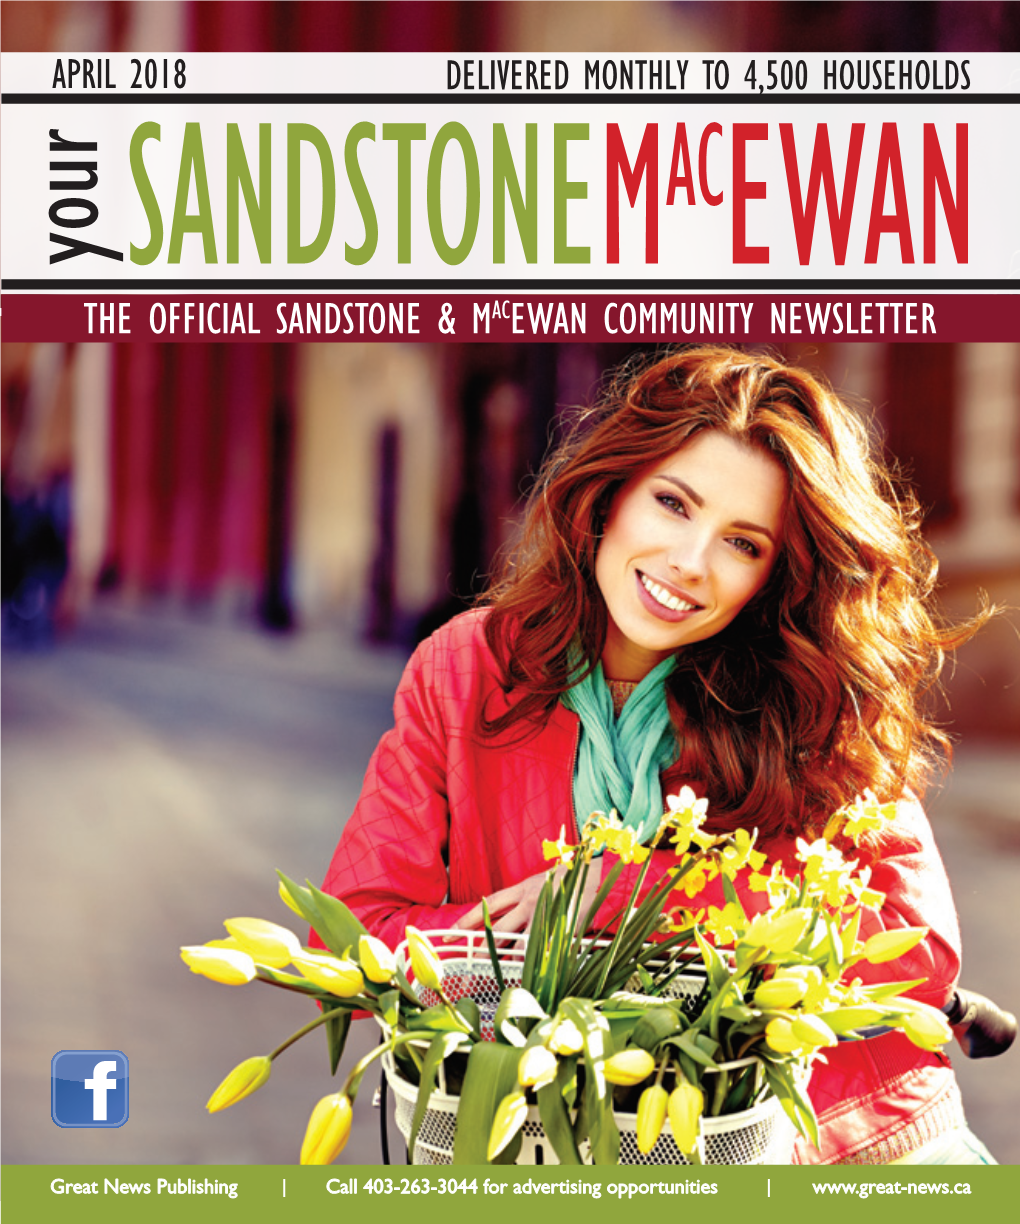 Sandstone-Macewan Community Association and Great News Publishing